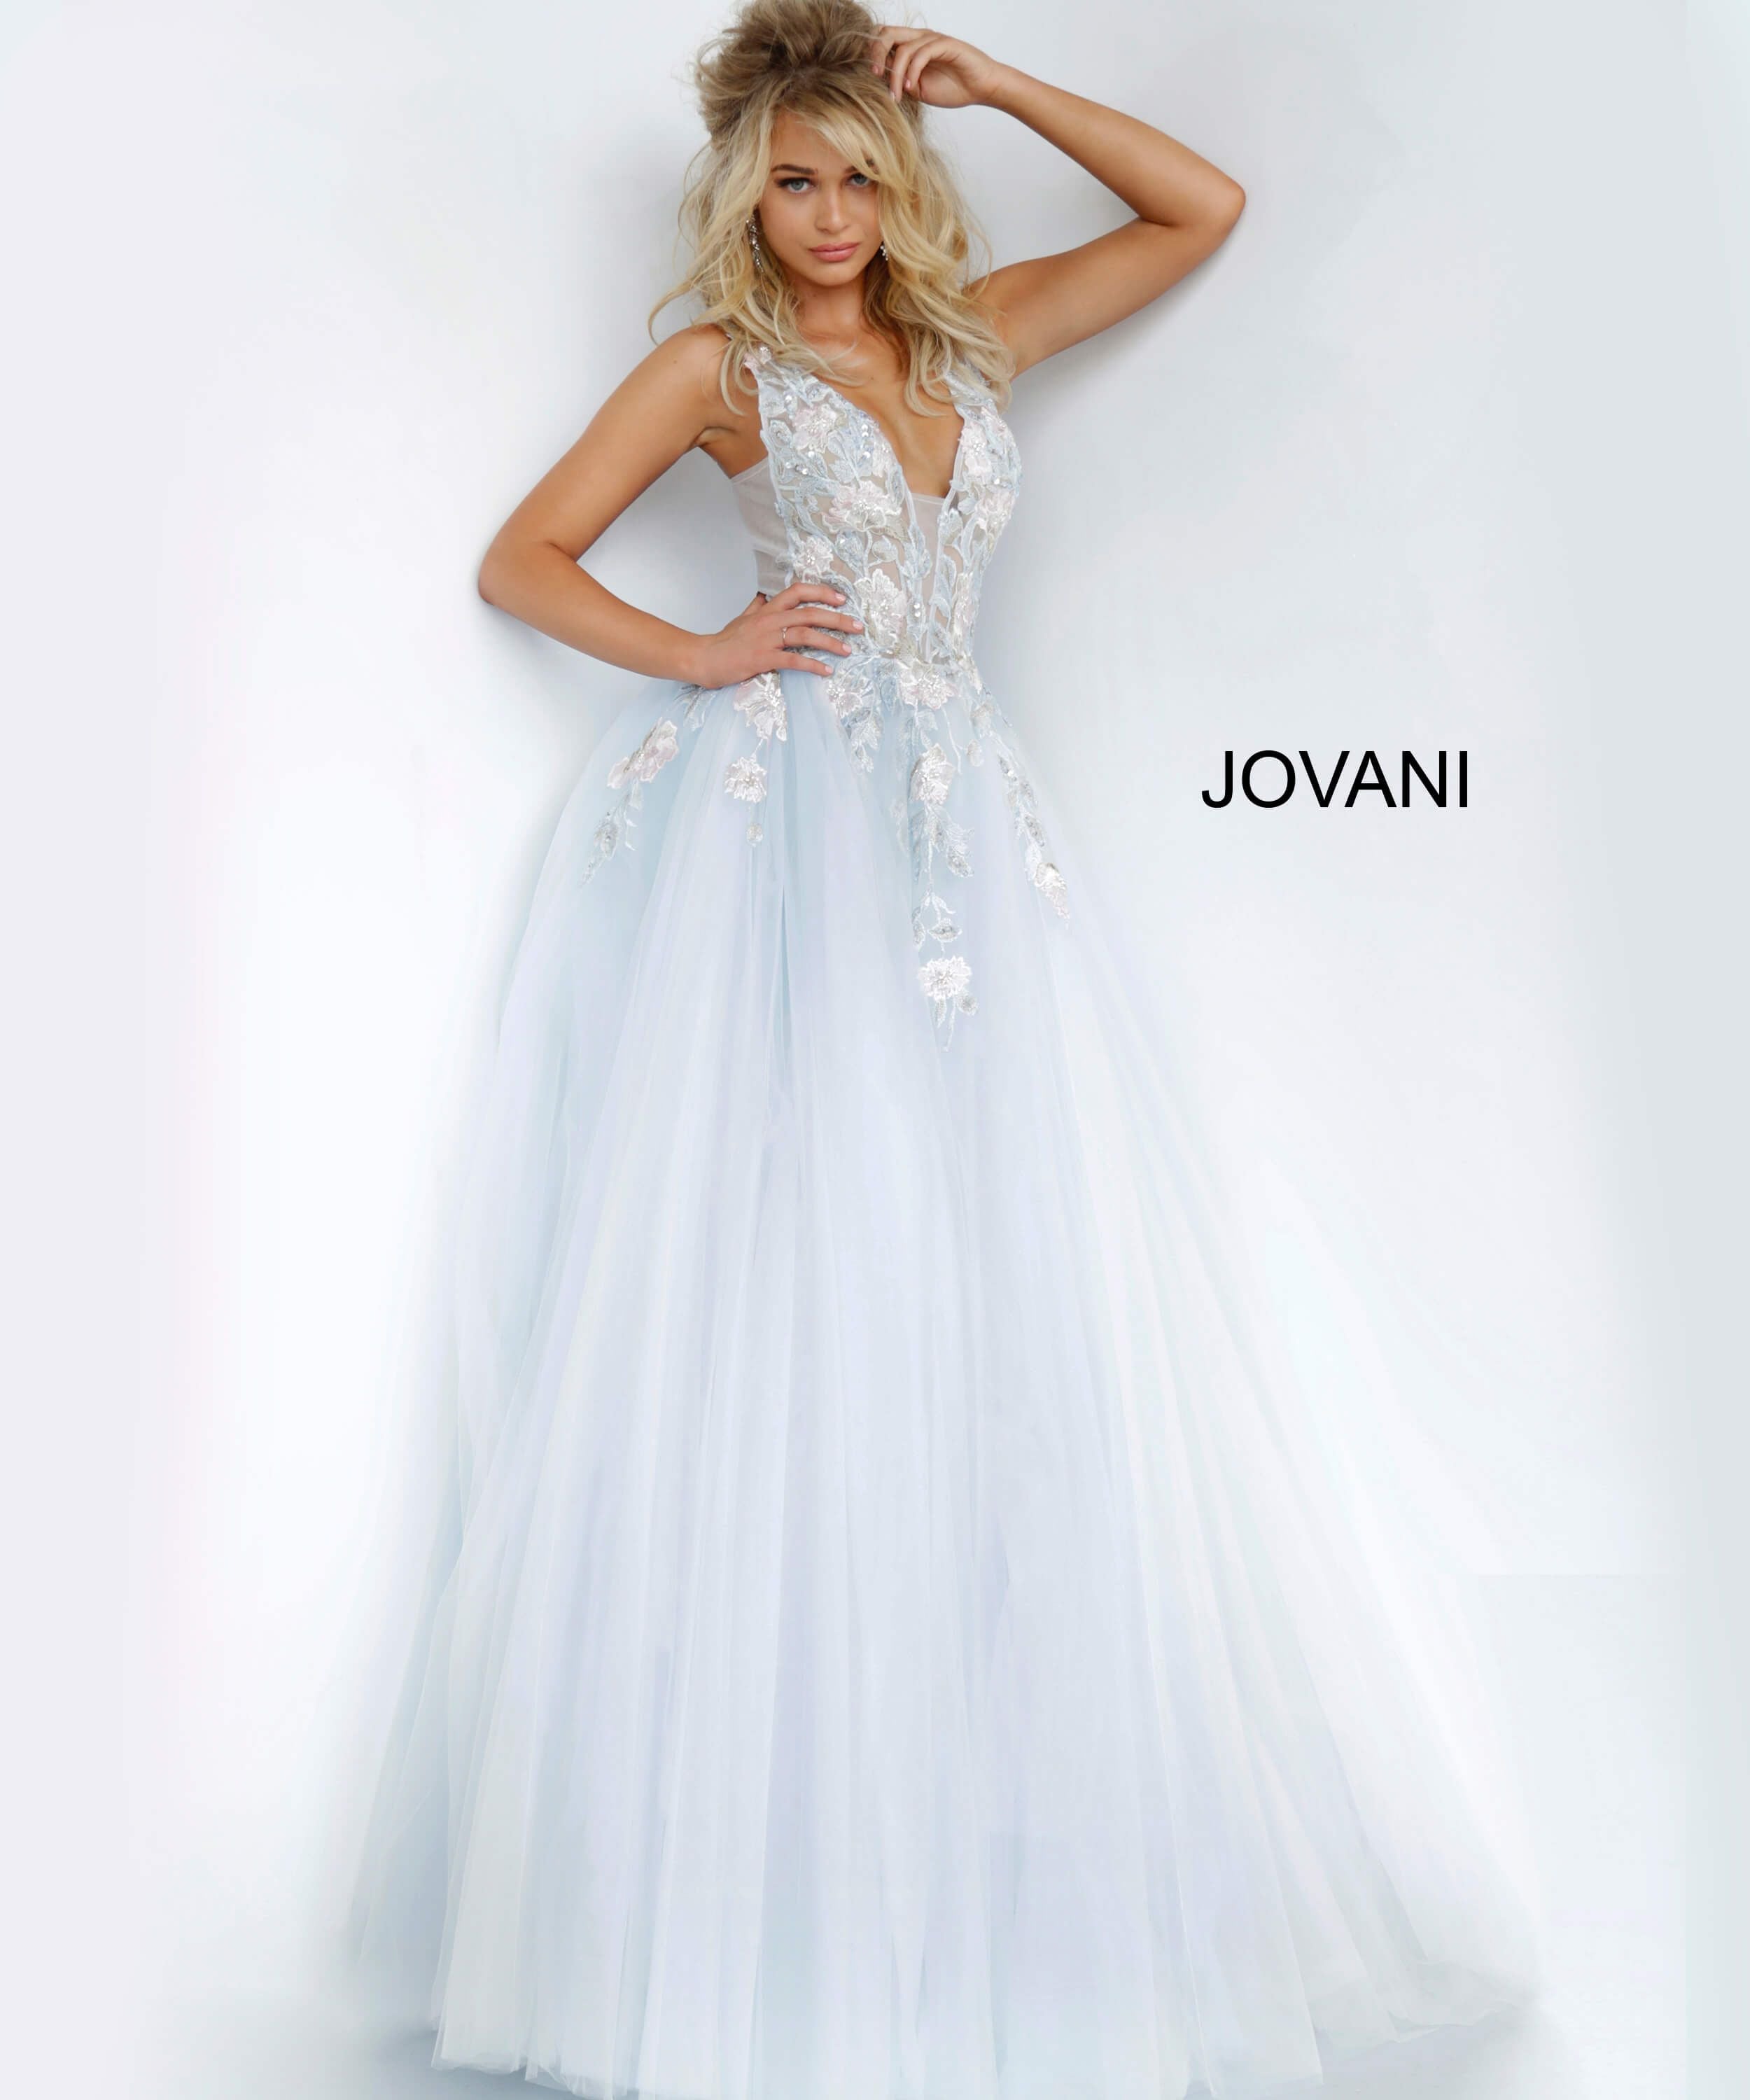 Jovani 11092 Long Sheer A Line Ballgown Formal Dress Floral Applique R ...